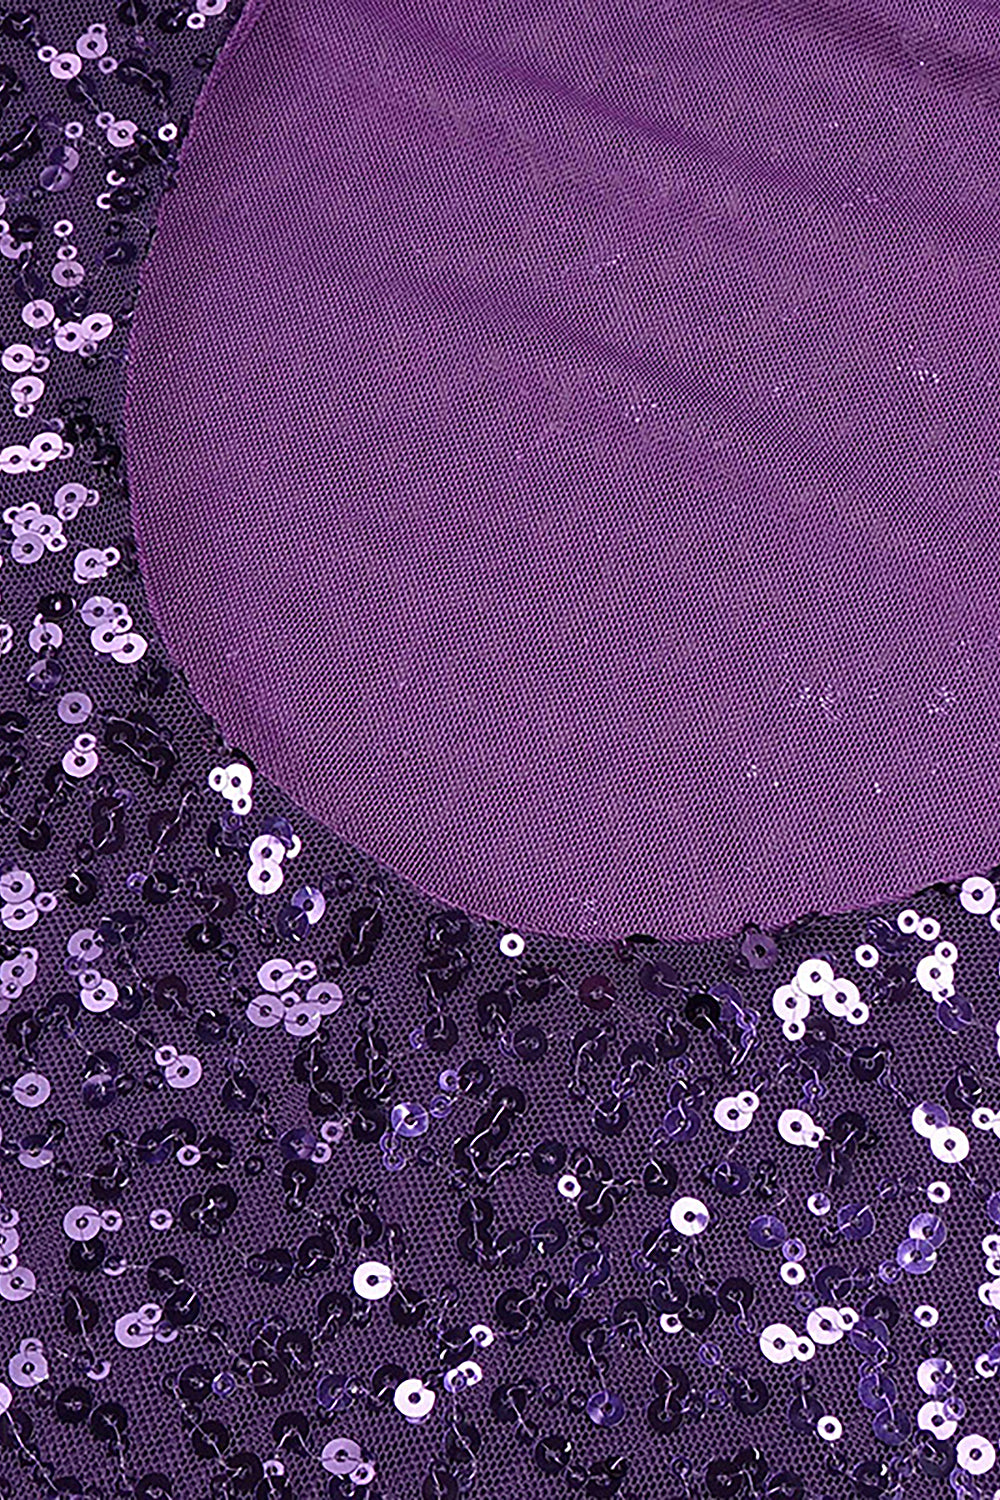 Purple Crew Neck Backless Long Sleeve Sequin Dress - Chicida